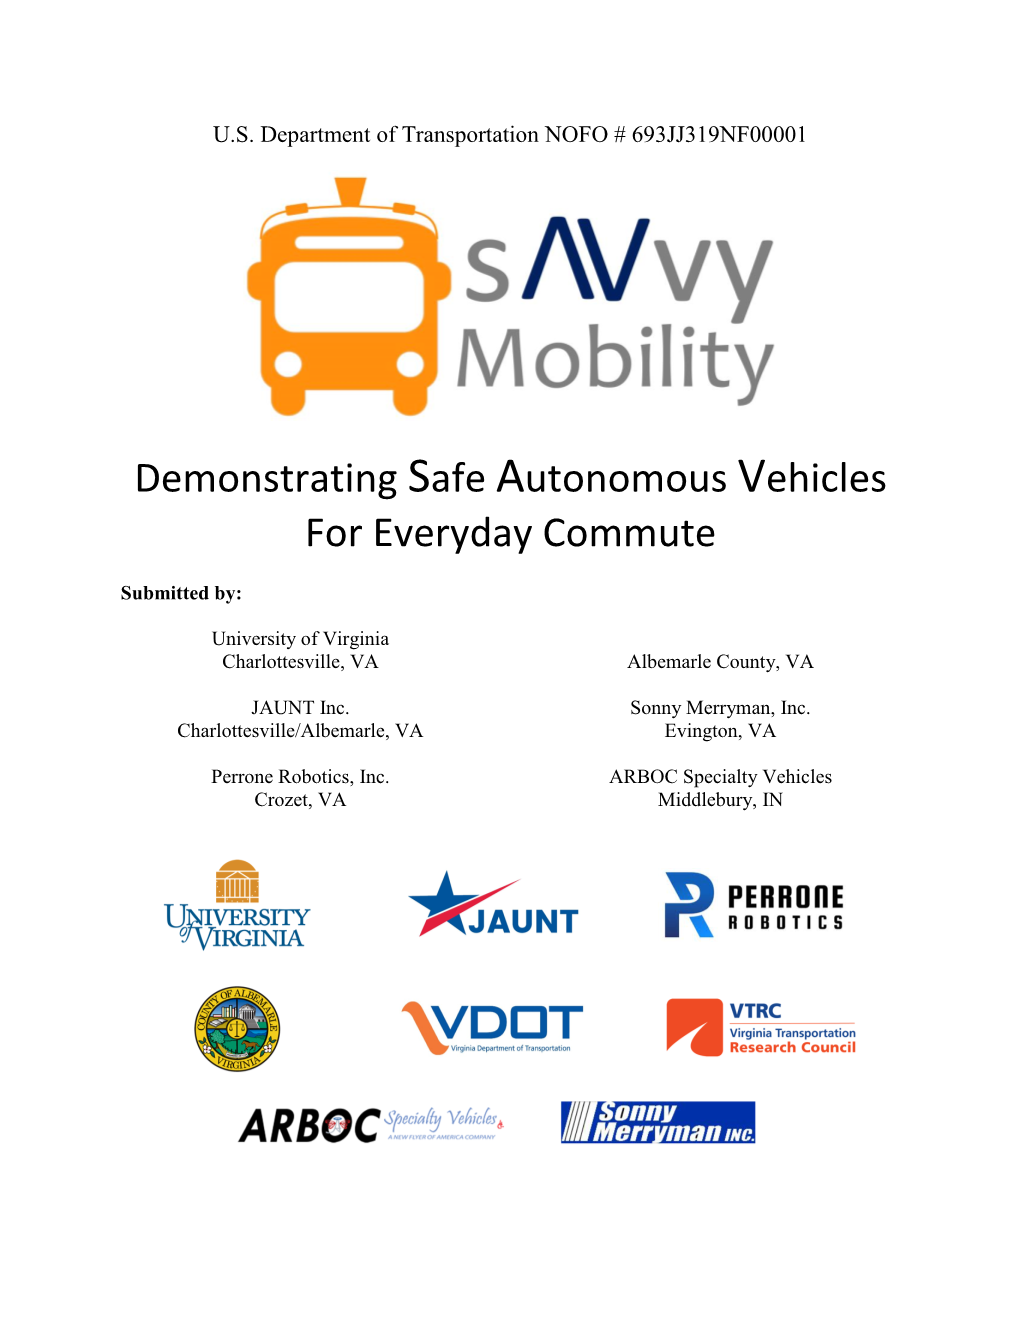 Demonstrating Safe Autonomous Vehicles for Everyday Commute